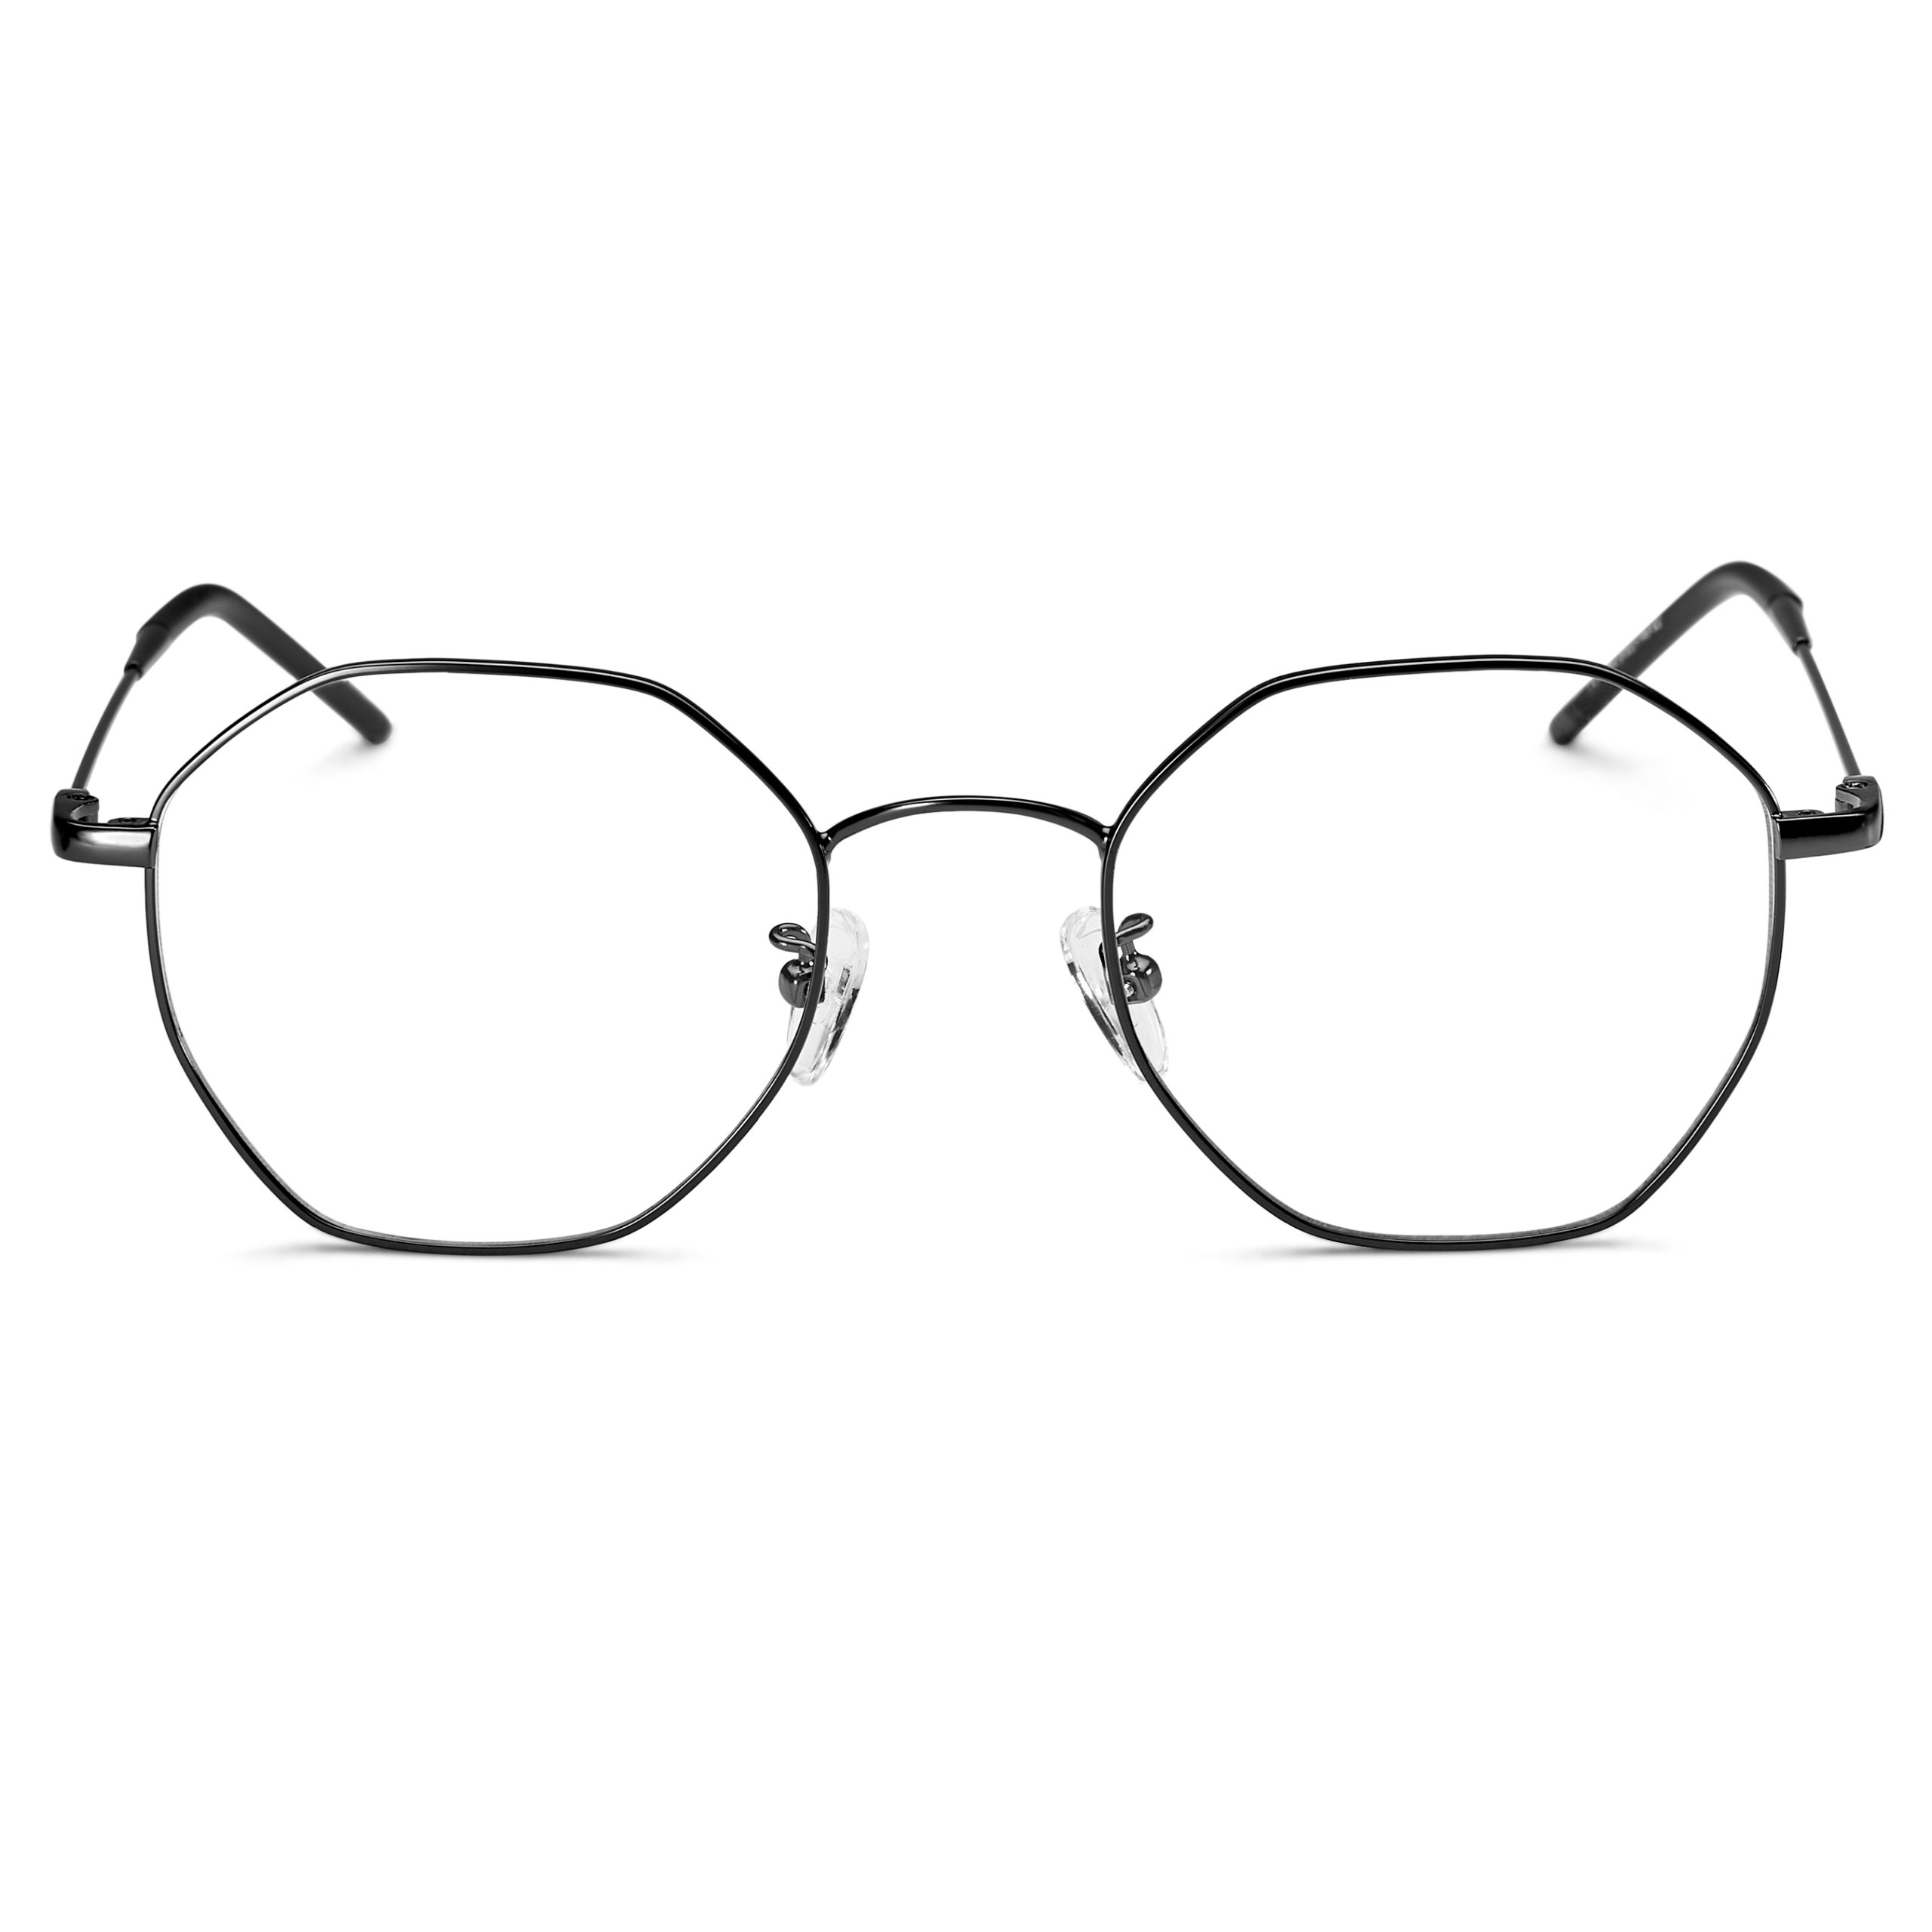 clear eye glass frames